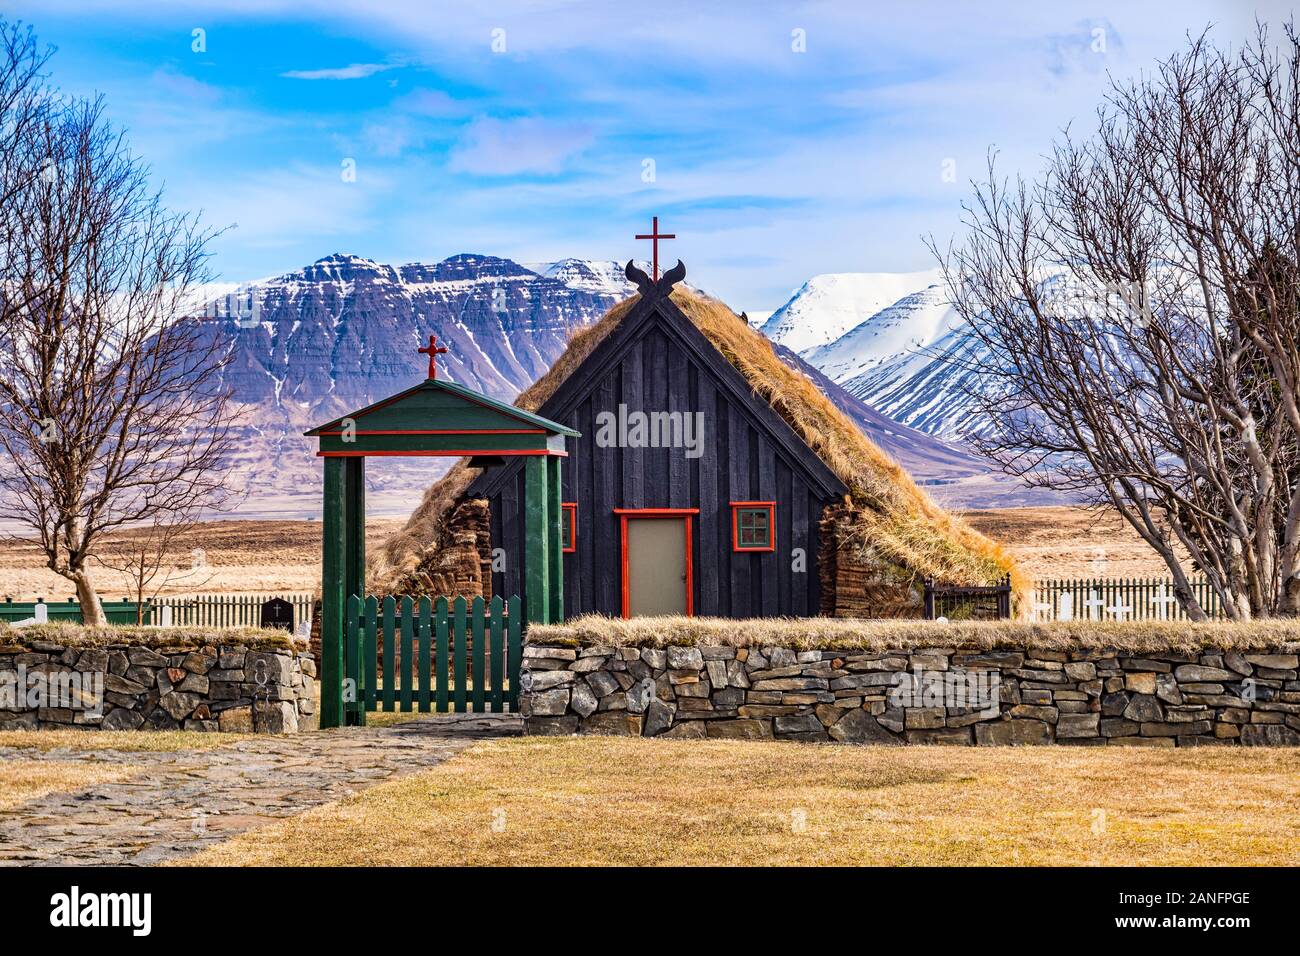 Viðimýrarkirkja, or Vidimyri Church, a 19th Century turf roofed church in the Skagafjörður district of North Iceland. Stock Photo